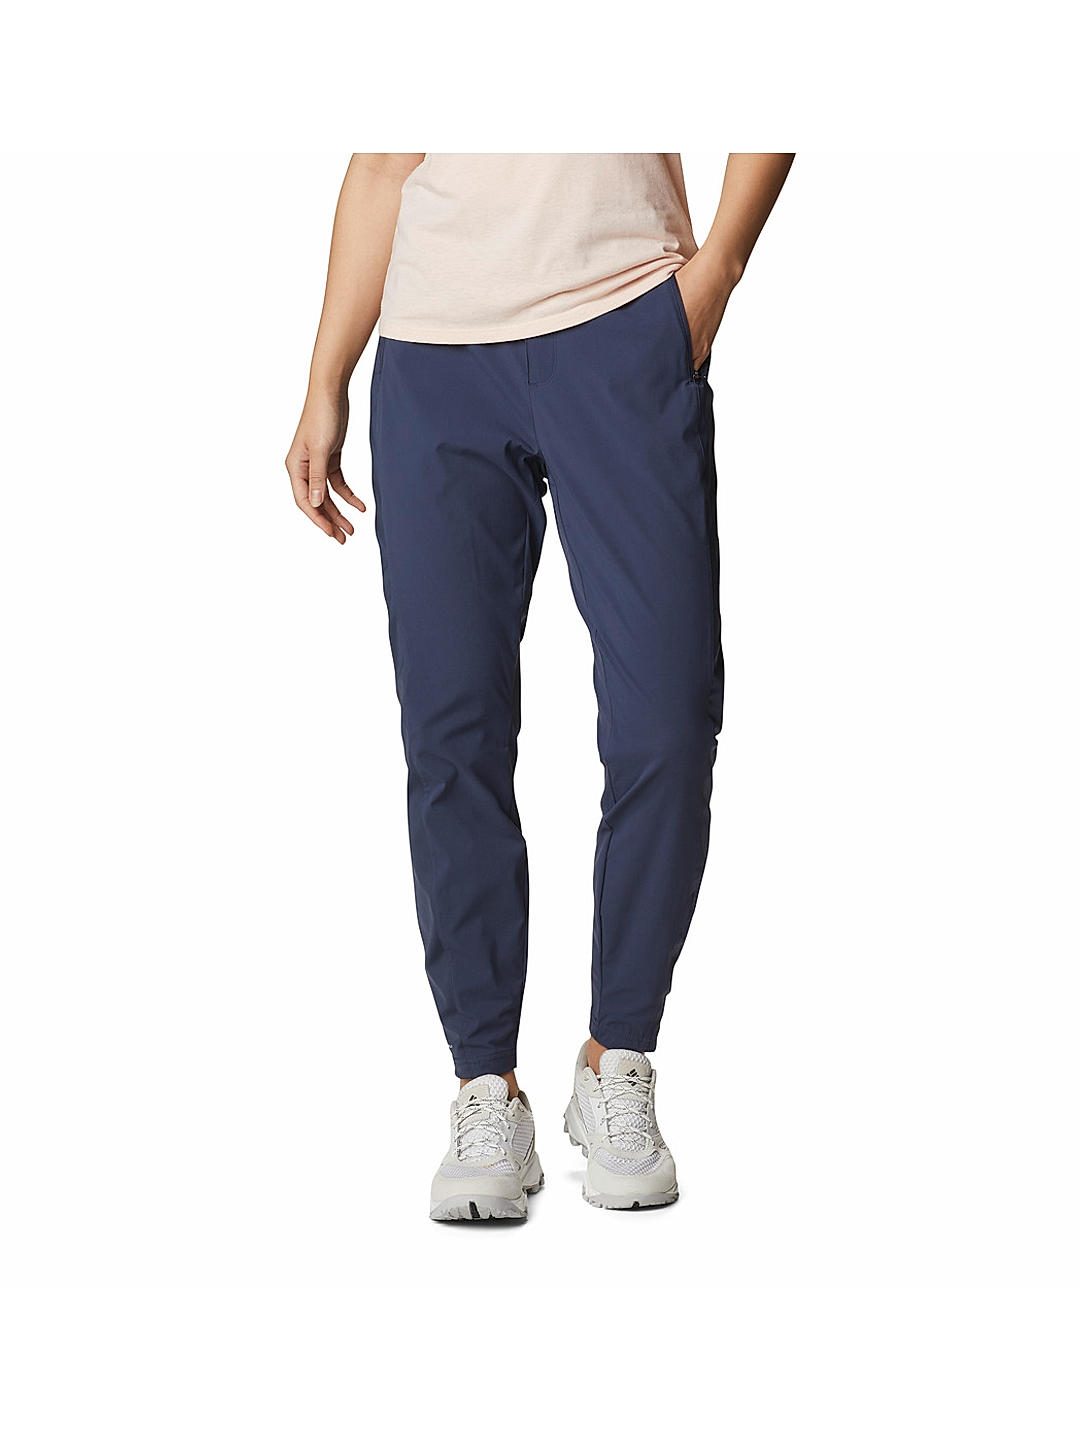 Buy Blue Claudia Ridge Pant for Women Online at Columbia Sportswear ...